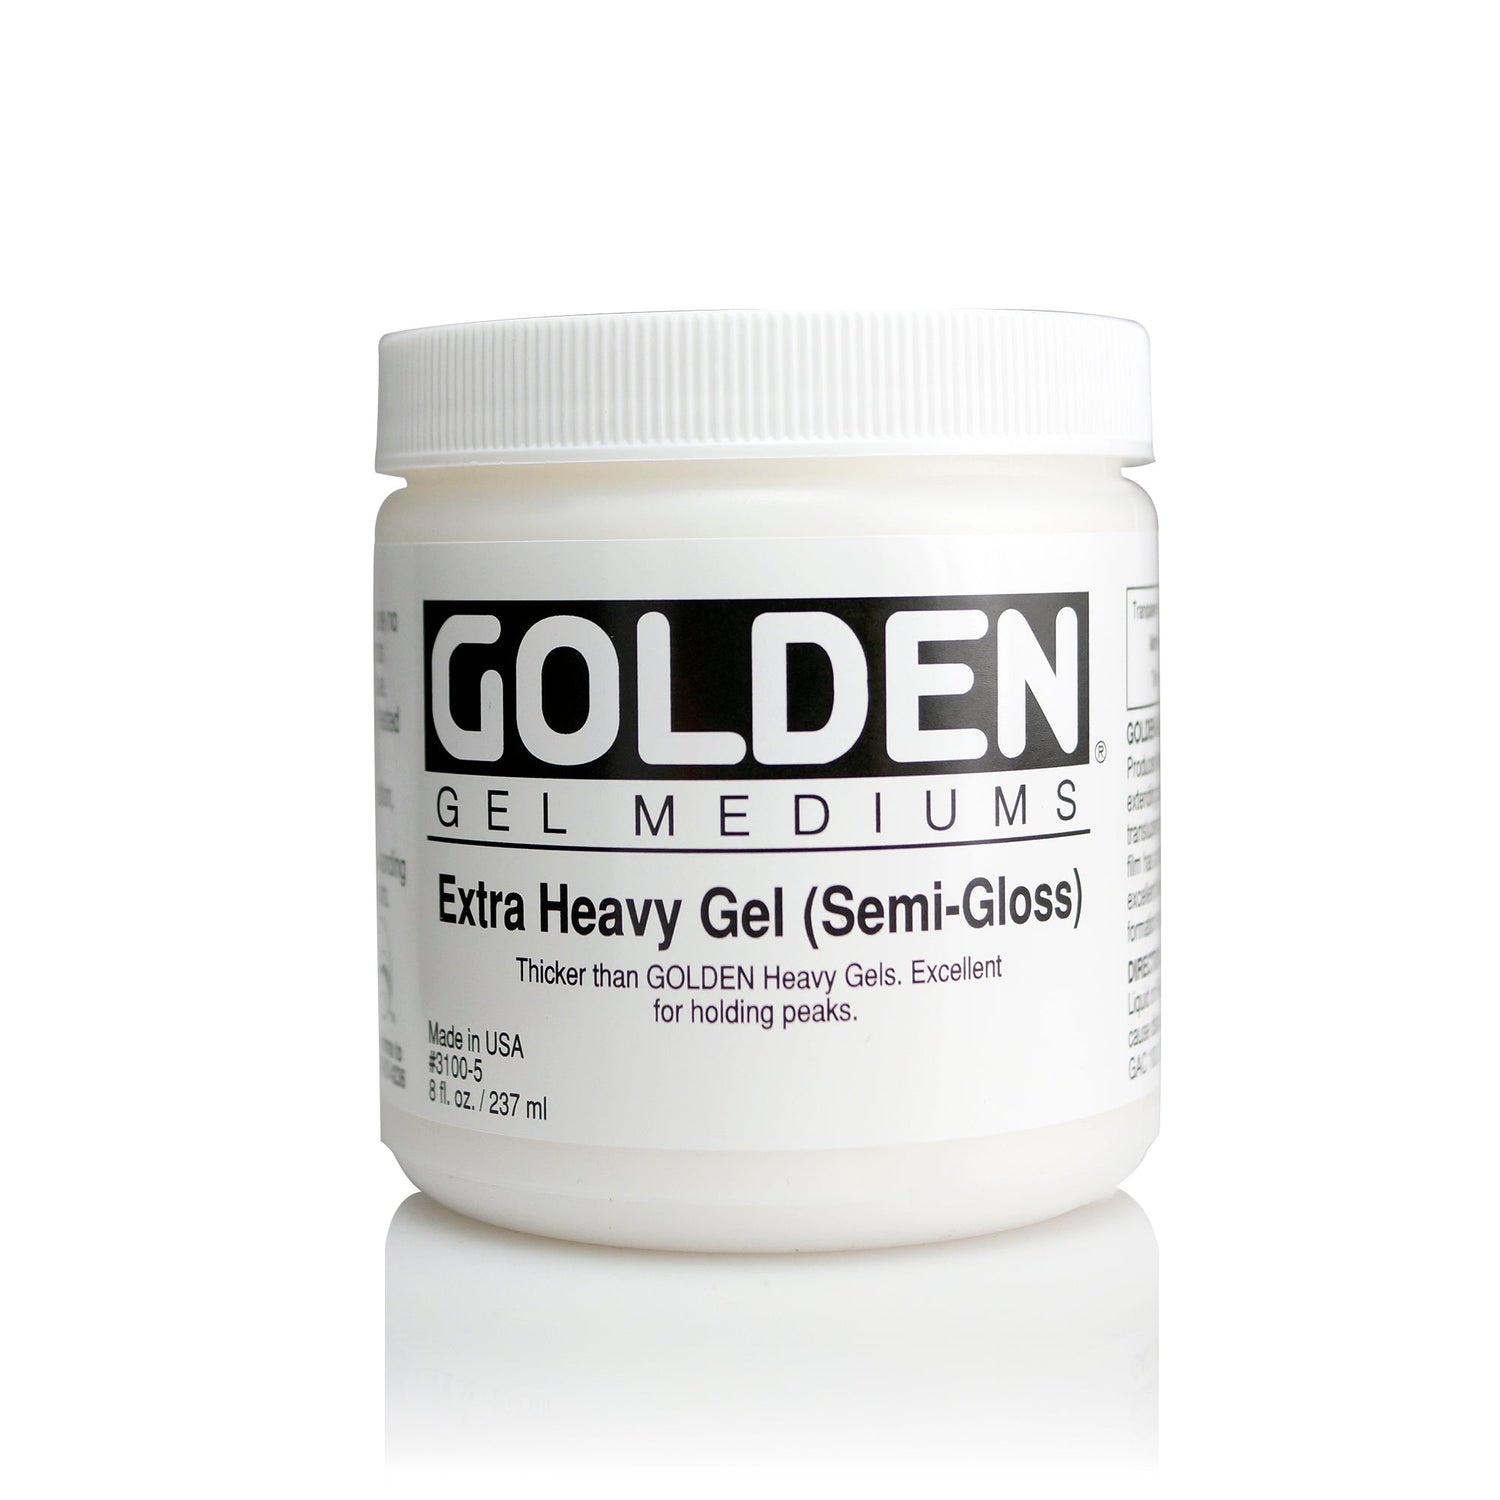 Golden Extra Heavy Gel (Semi-Gloss) 237ml - theartshop.com.au